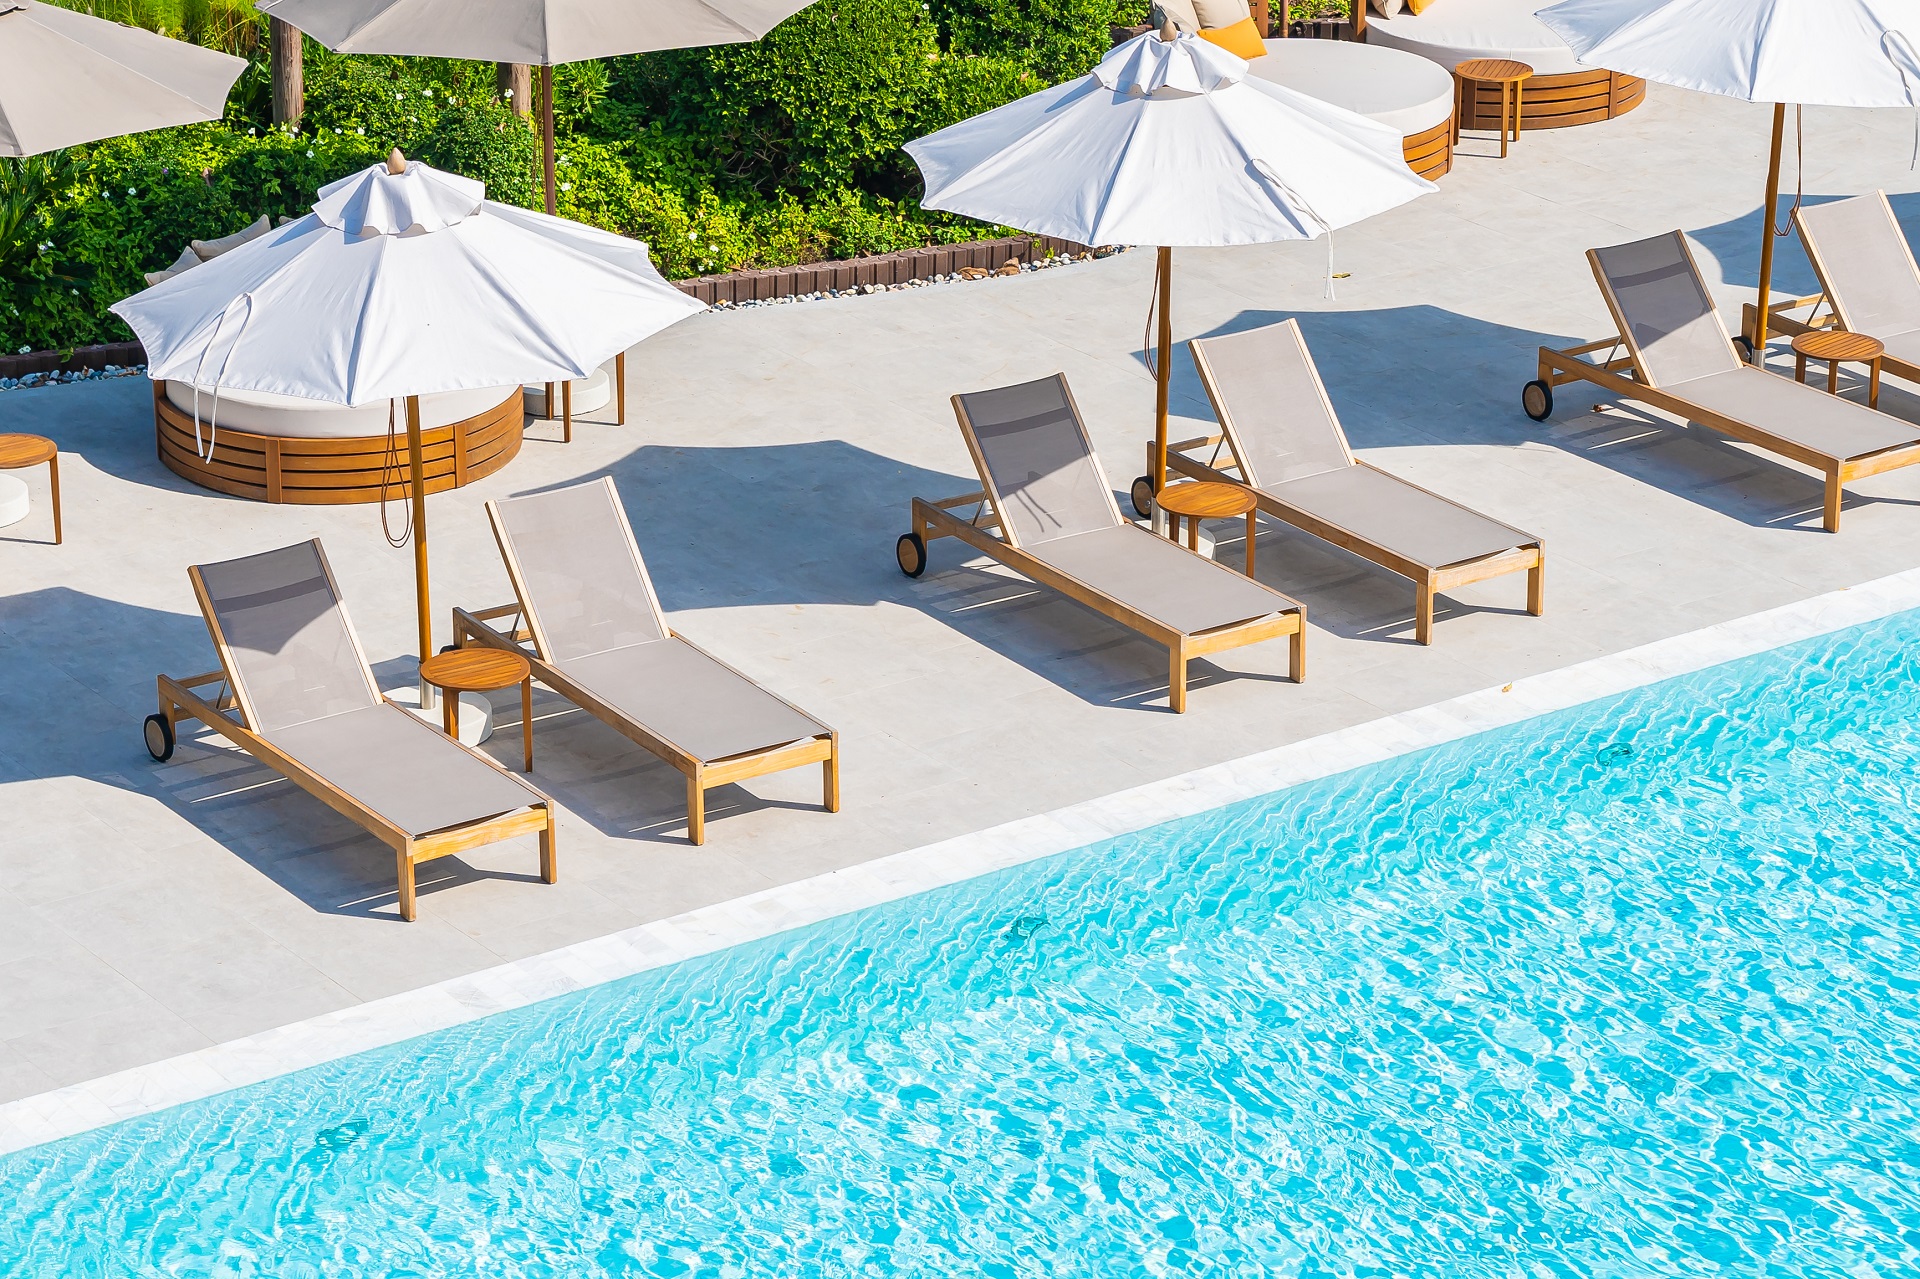 r17-umbrella-deck-chair-around-outdoor-swimming-pool-hotel-resort-nearly-sea-beach-o-16535703745386.jpg